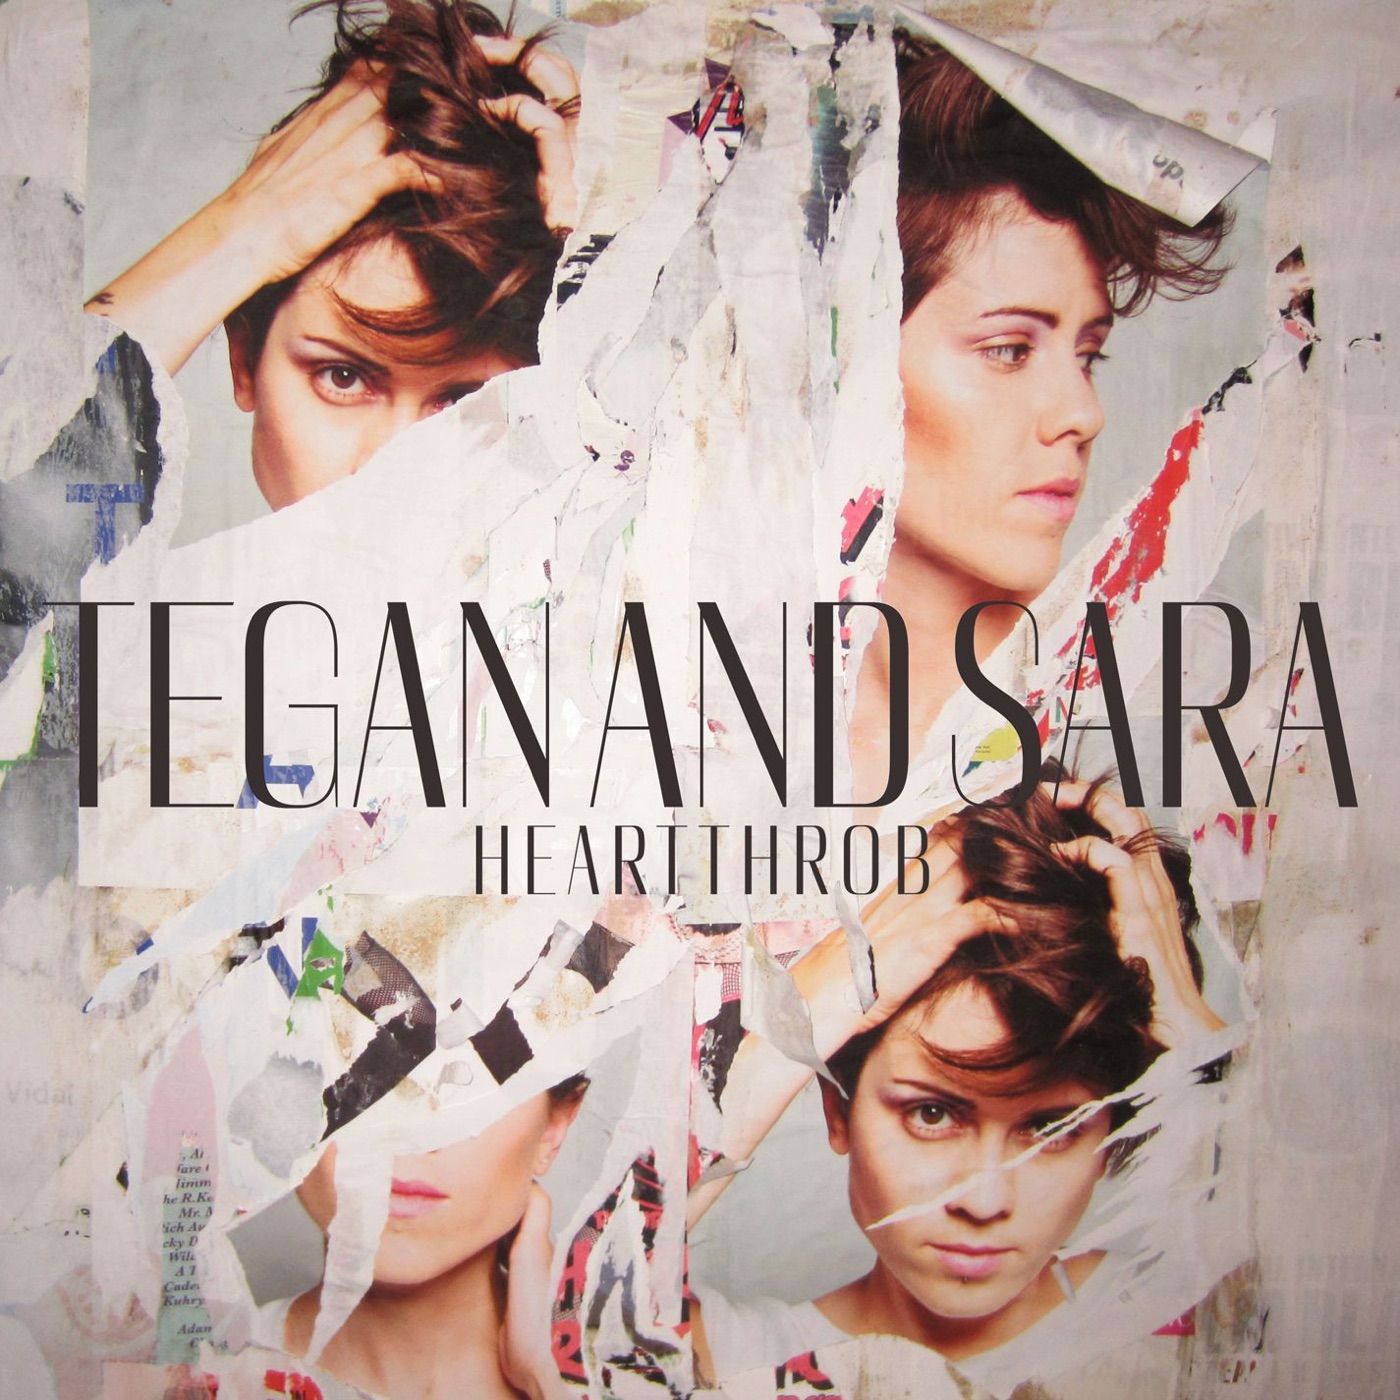 Heartthrob by Tegan and Sara